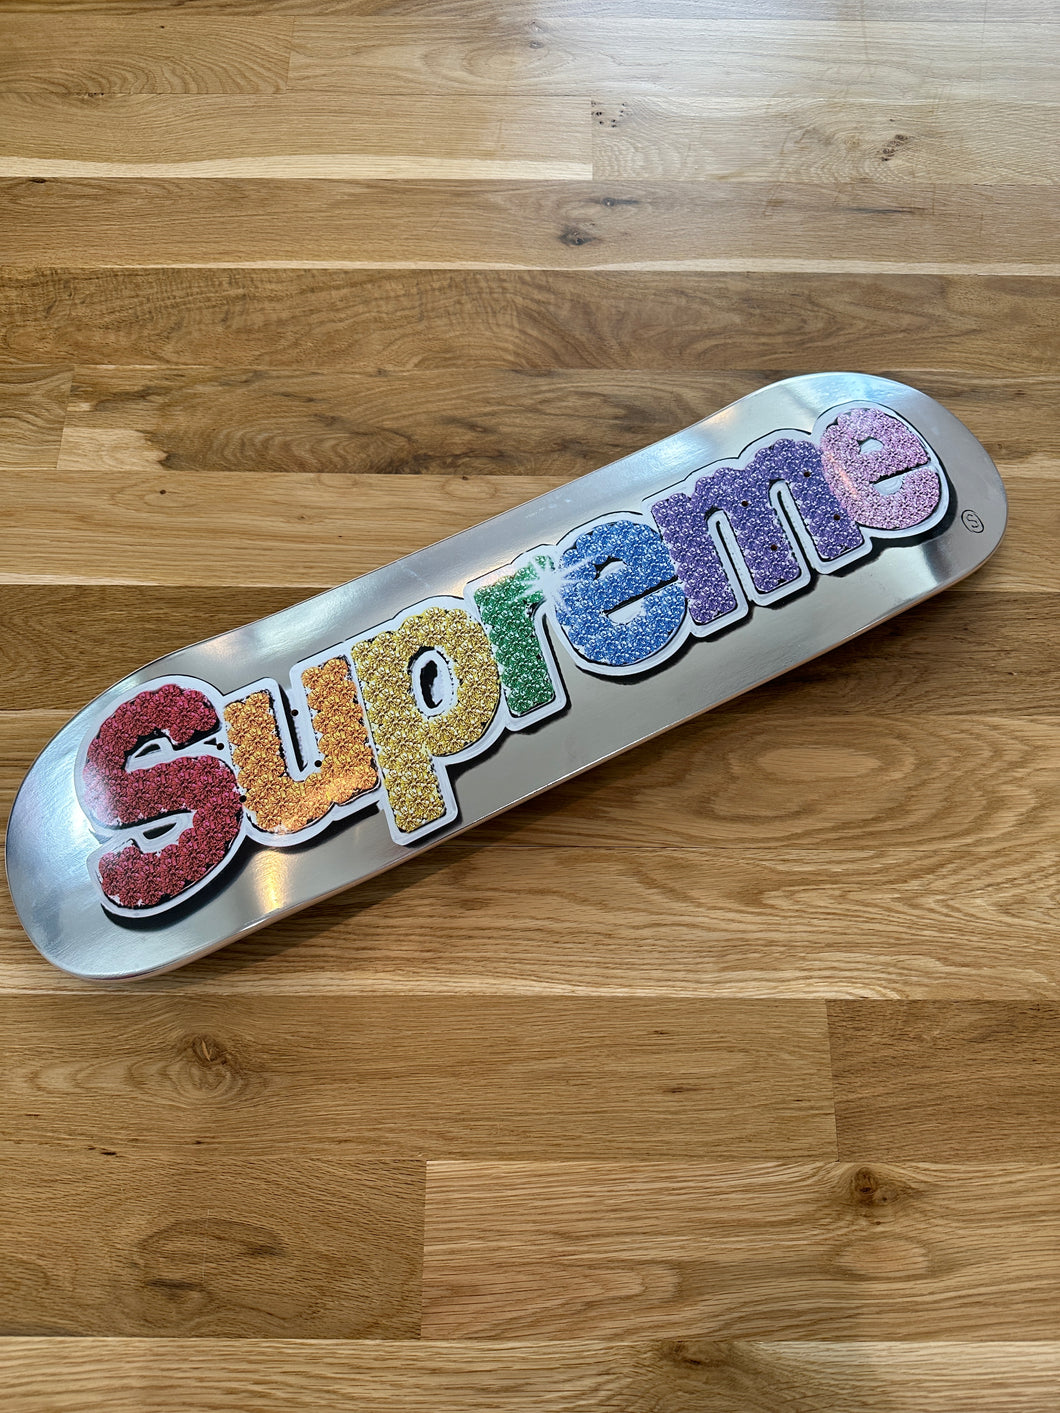 Supreme Bling Box Logo Skateboard Deck Platinum